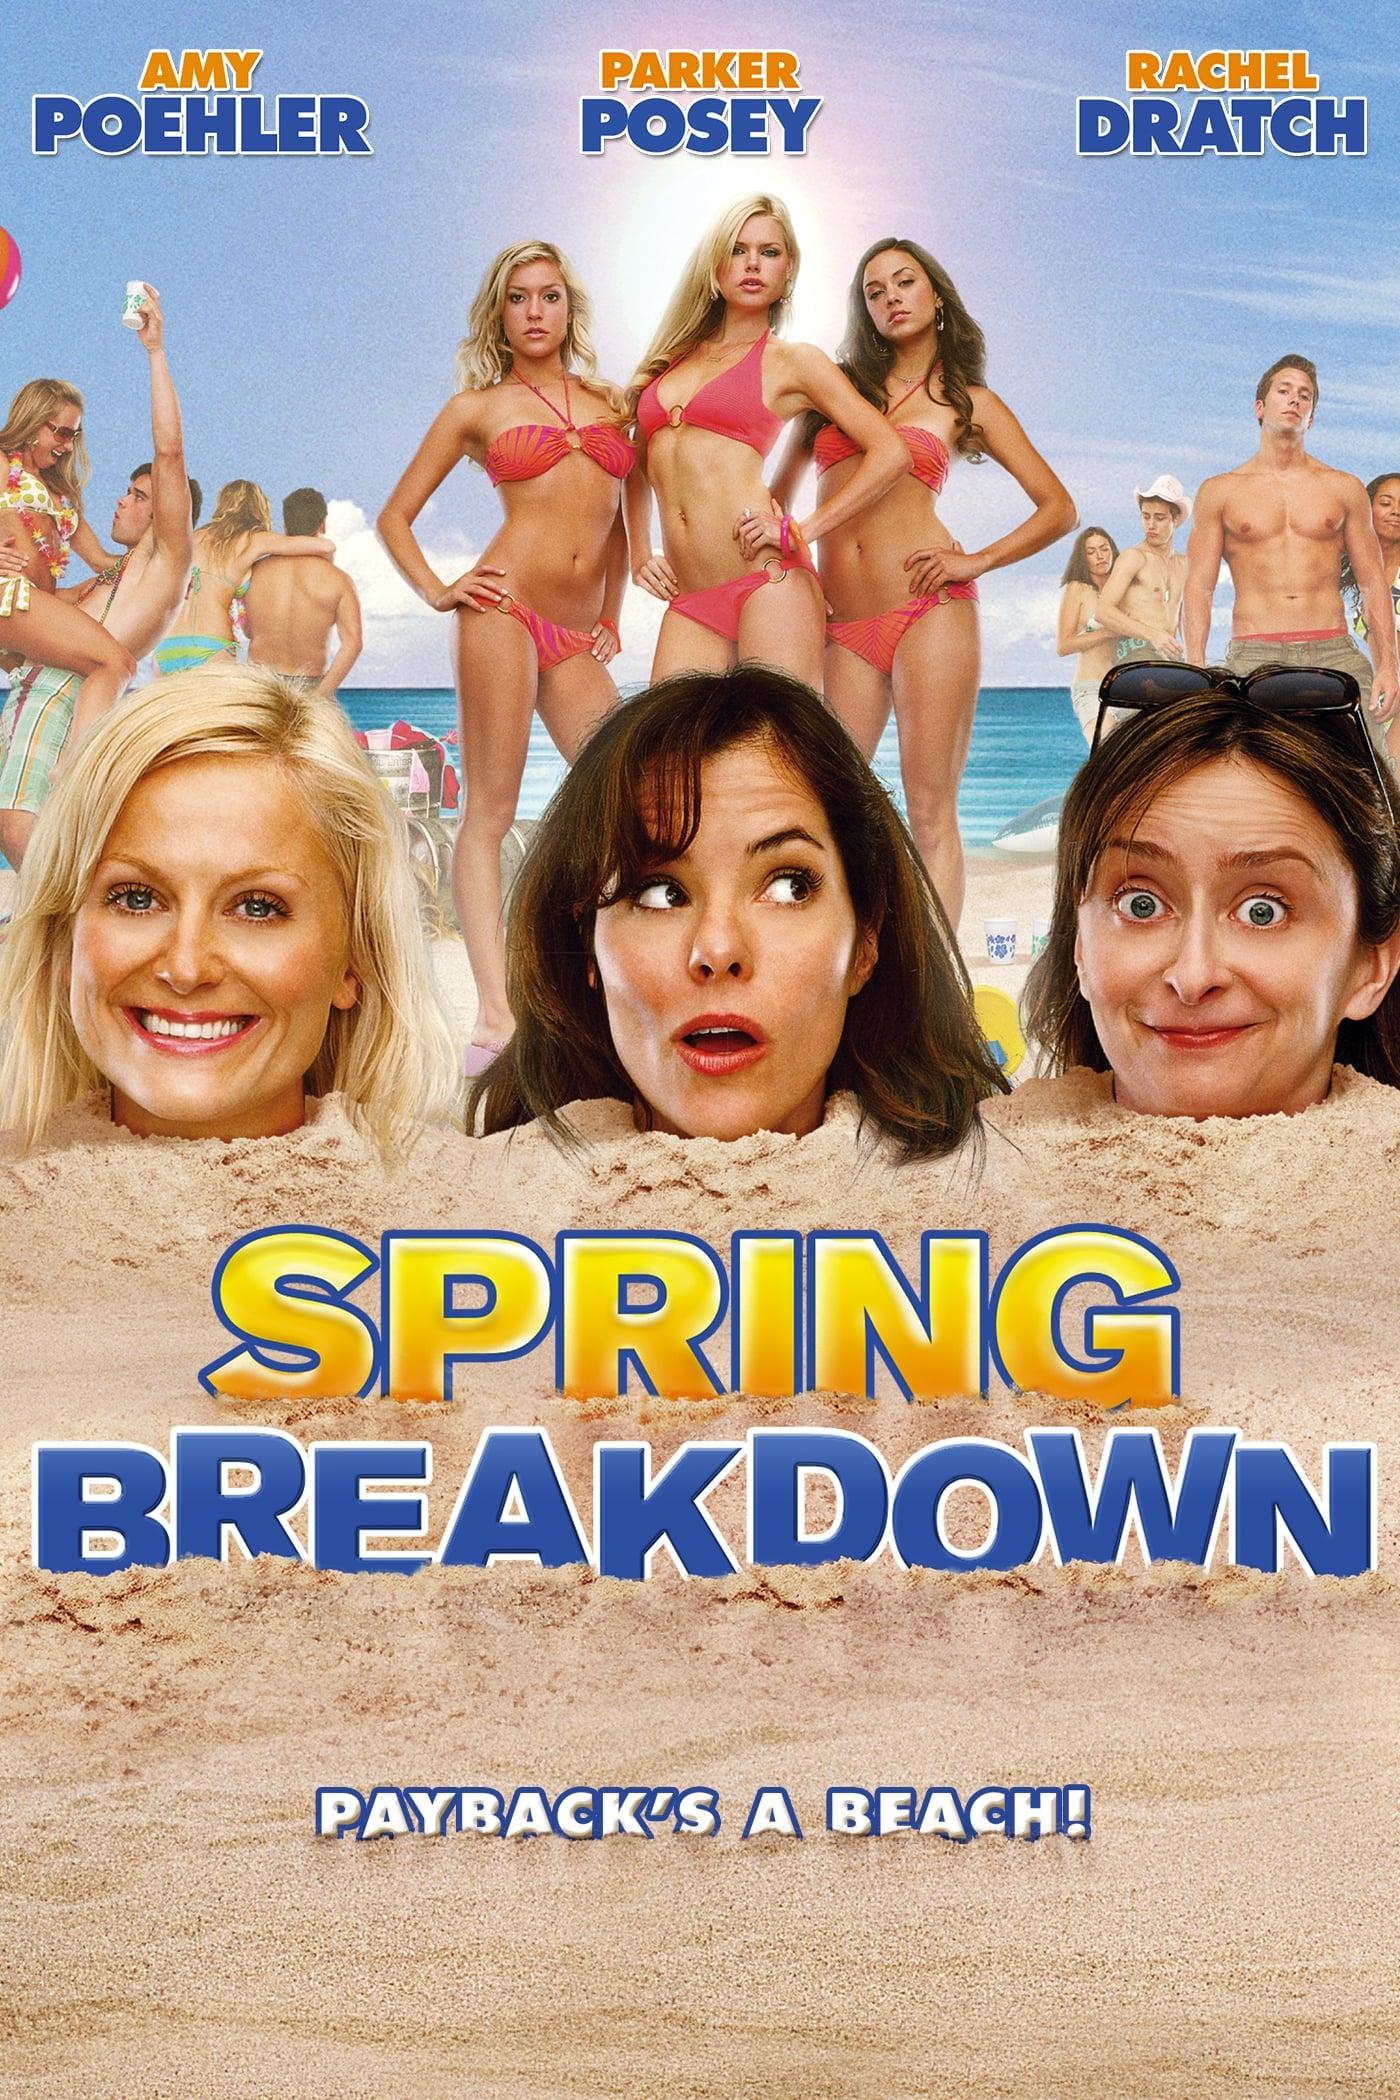 Spring Breakdown poster